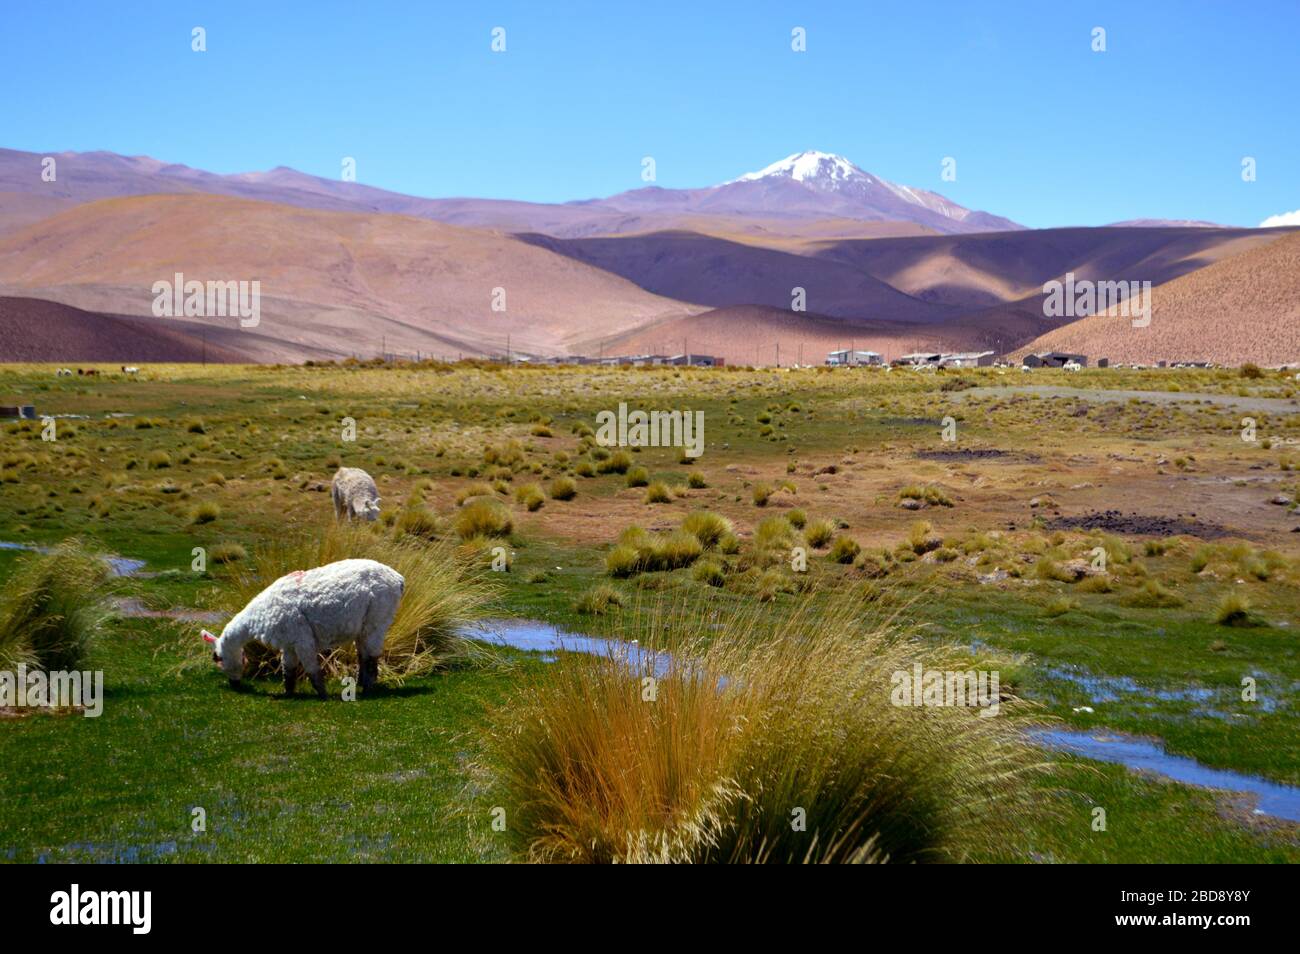 Lamas grasen in der fruchtbaren Ebene von Santa Rosa de los Pastos Grandes, Salta, Argentinien Stockfoto